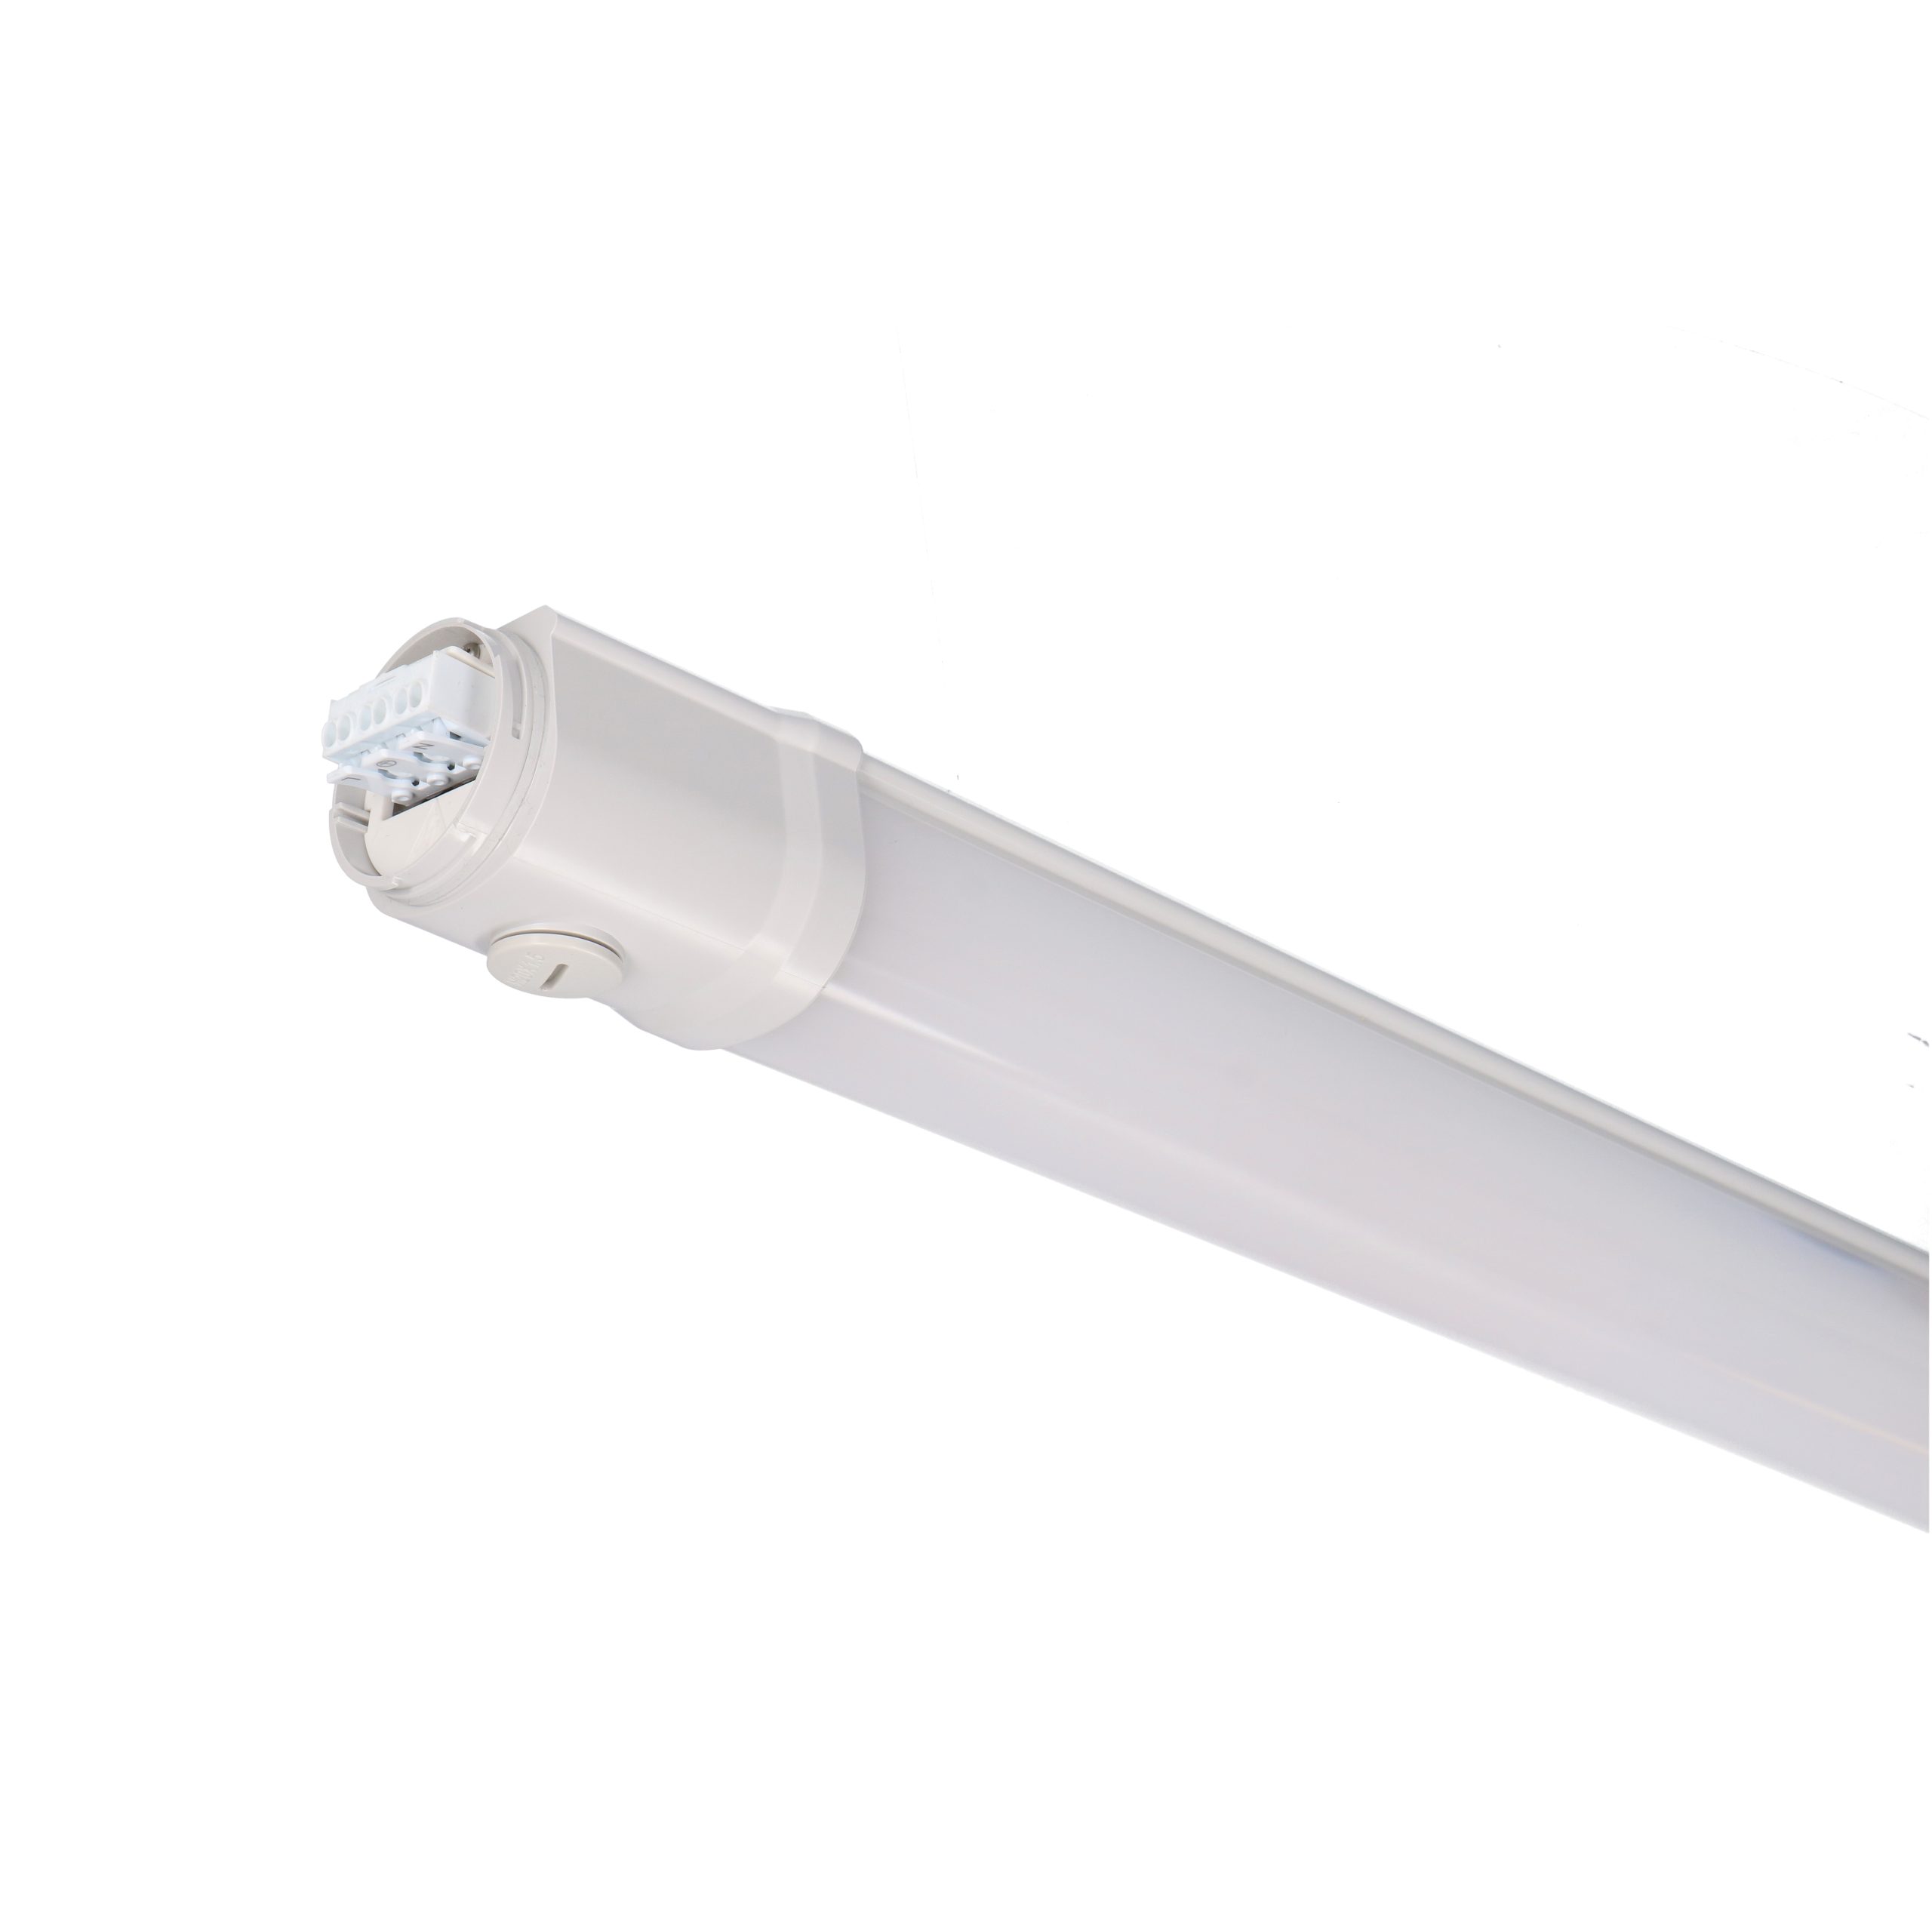 LED's modular LED, IP65 Deckenleuchte PRO light 40W neutralweiß LED 2400295 LED-Feuchtraumleuchte, 150cm durchverdrahtet